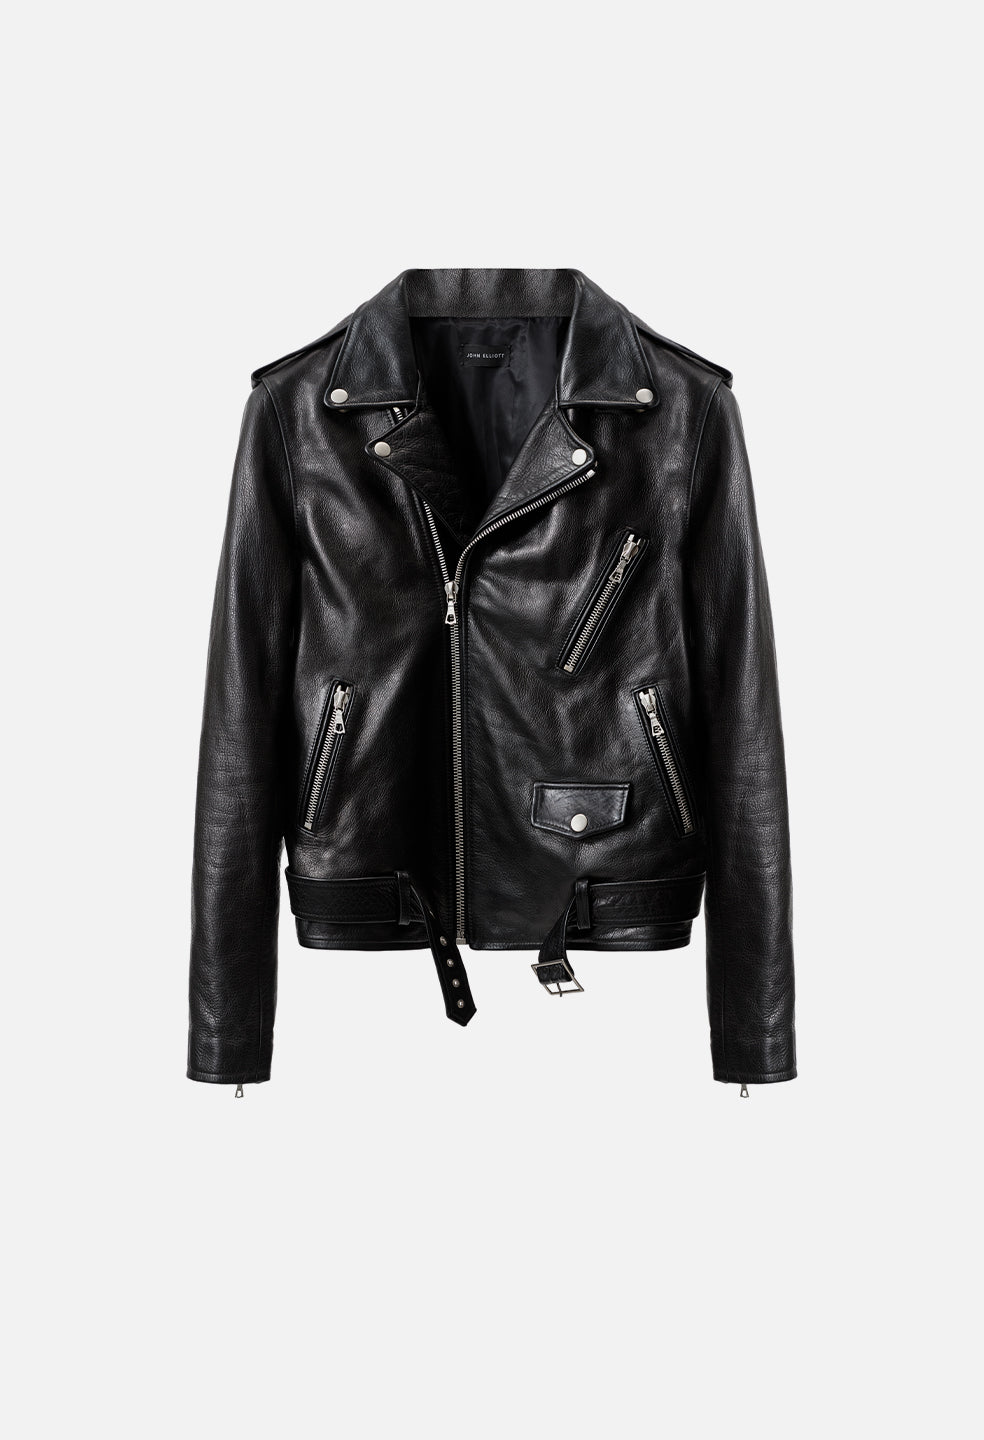 Black Leather Jacket ZARA Mens | eBay